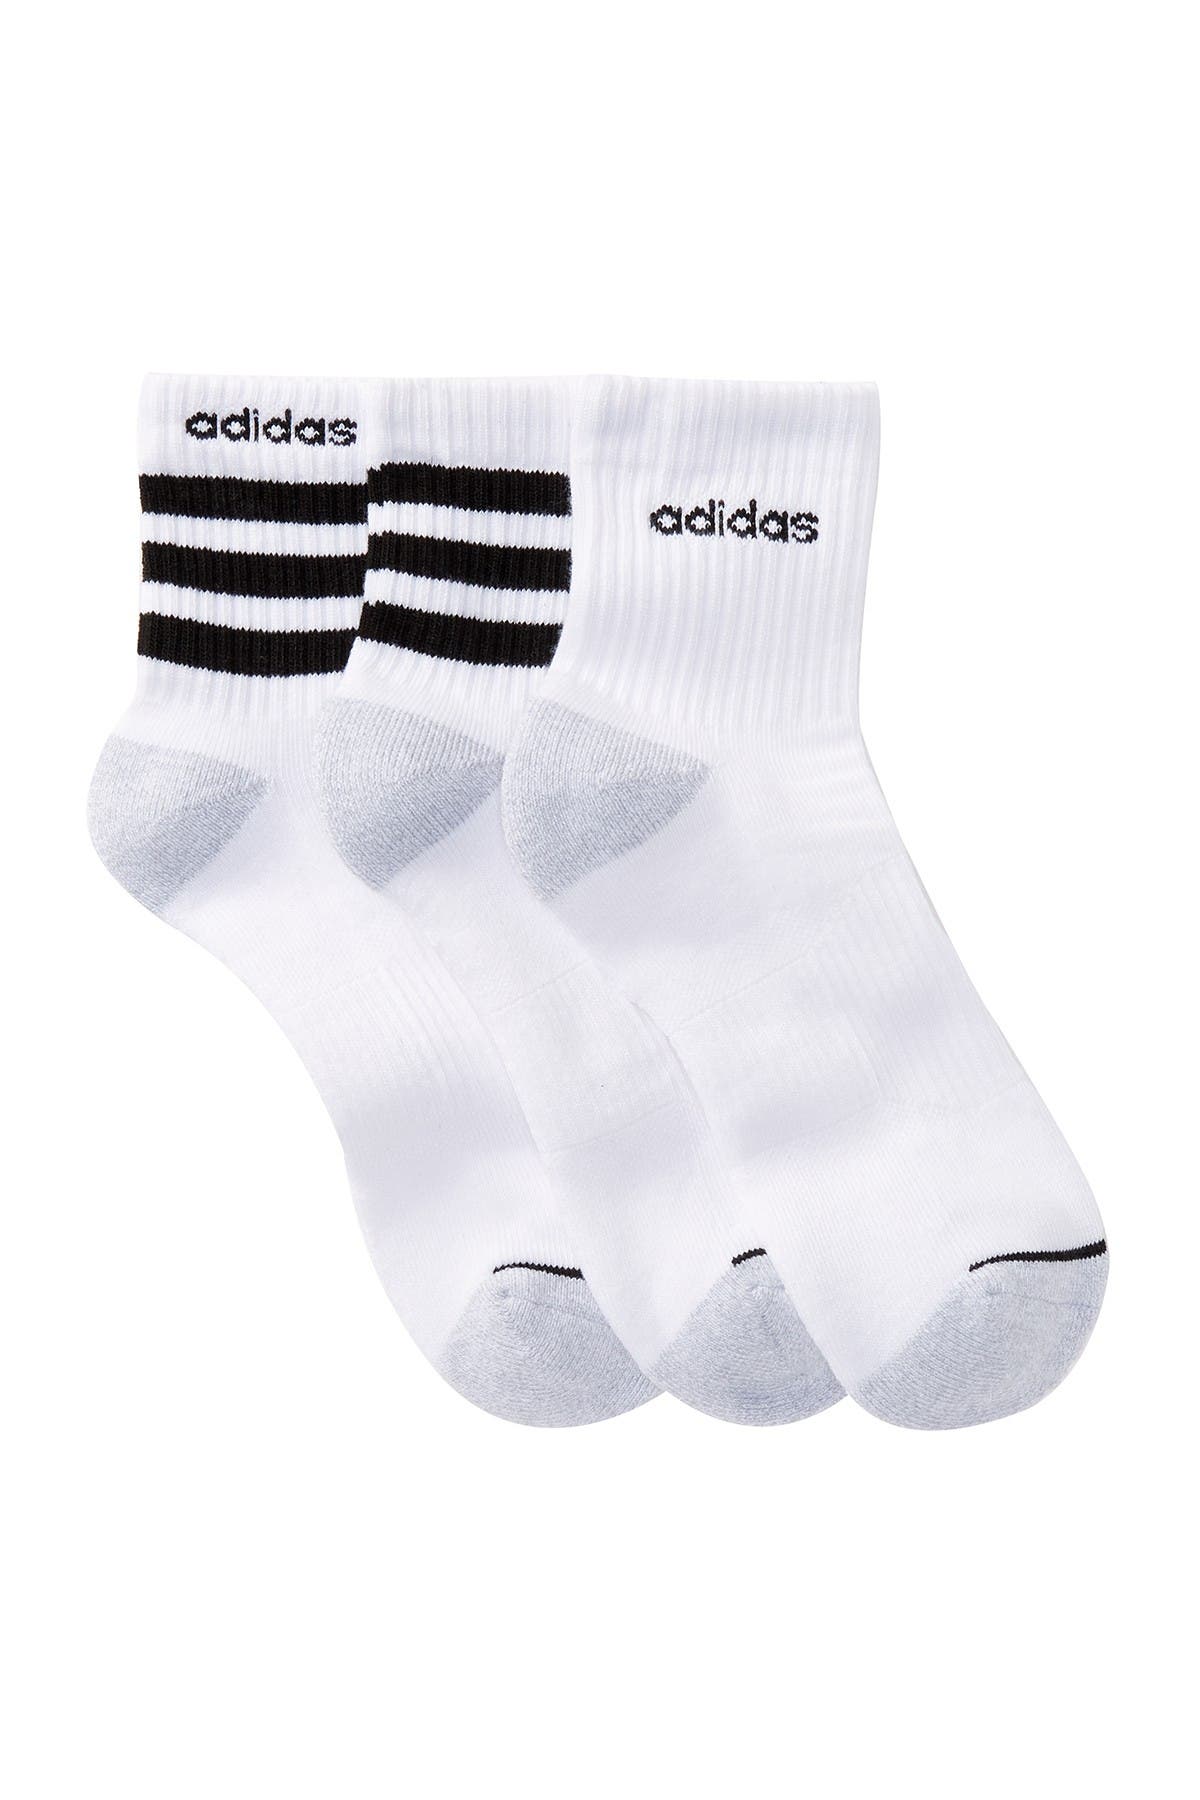 adidas | 3-Stripe Climalite Mid Crew Socks - Pack of 3 | Nordstrom Rack